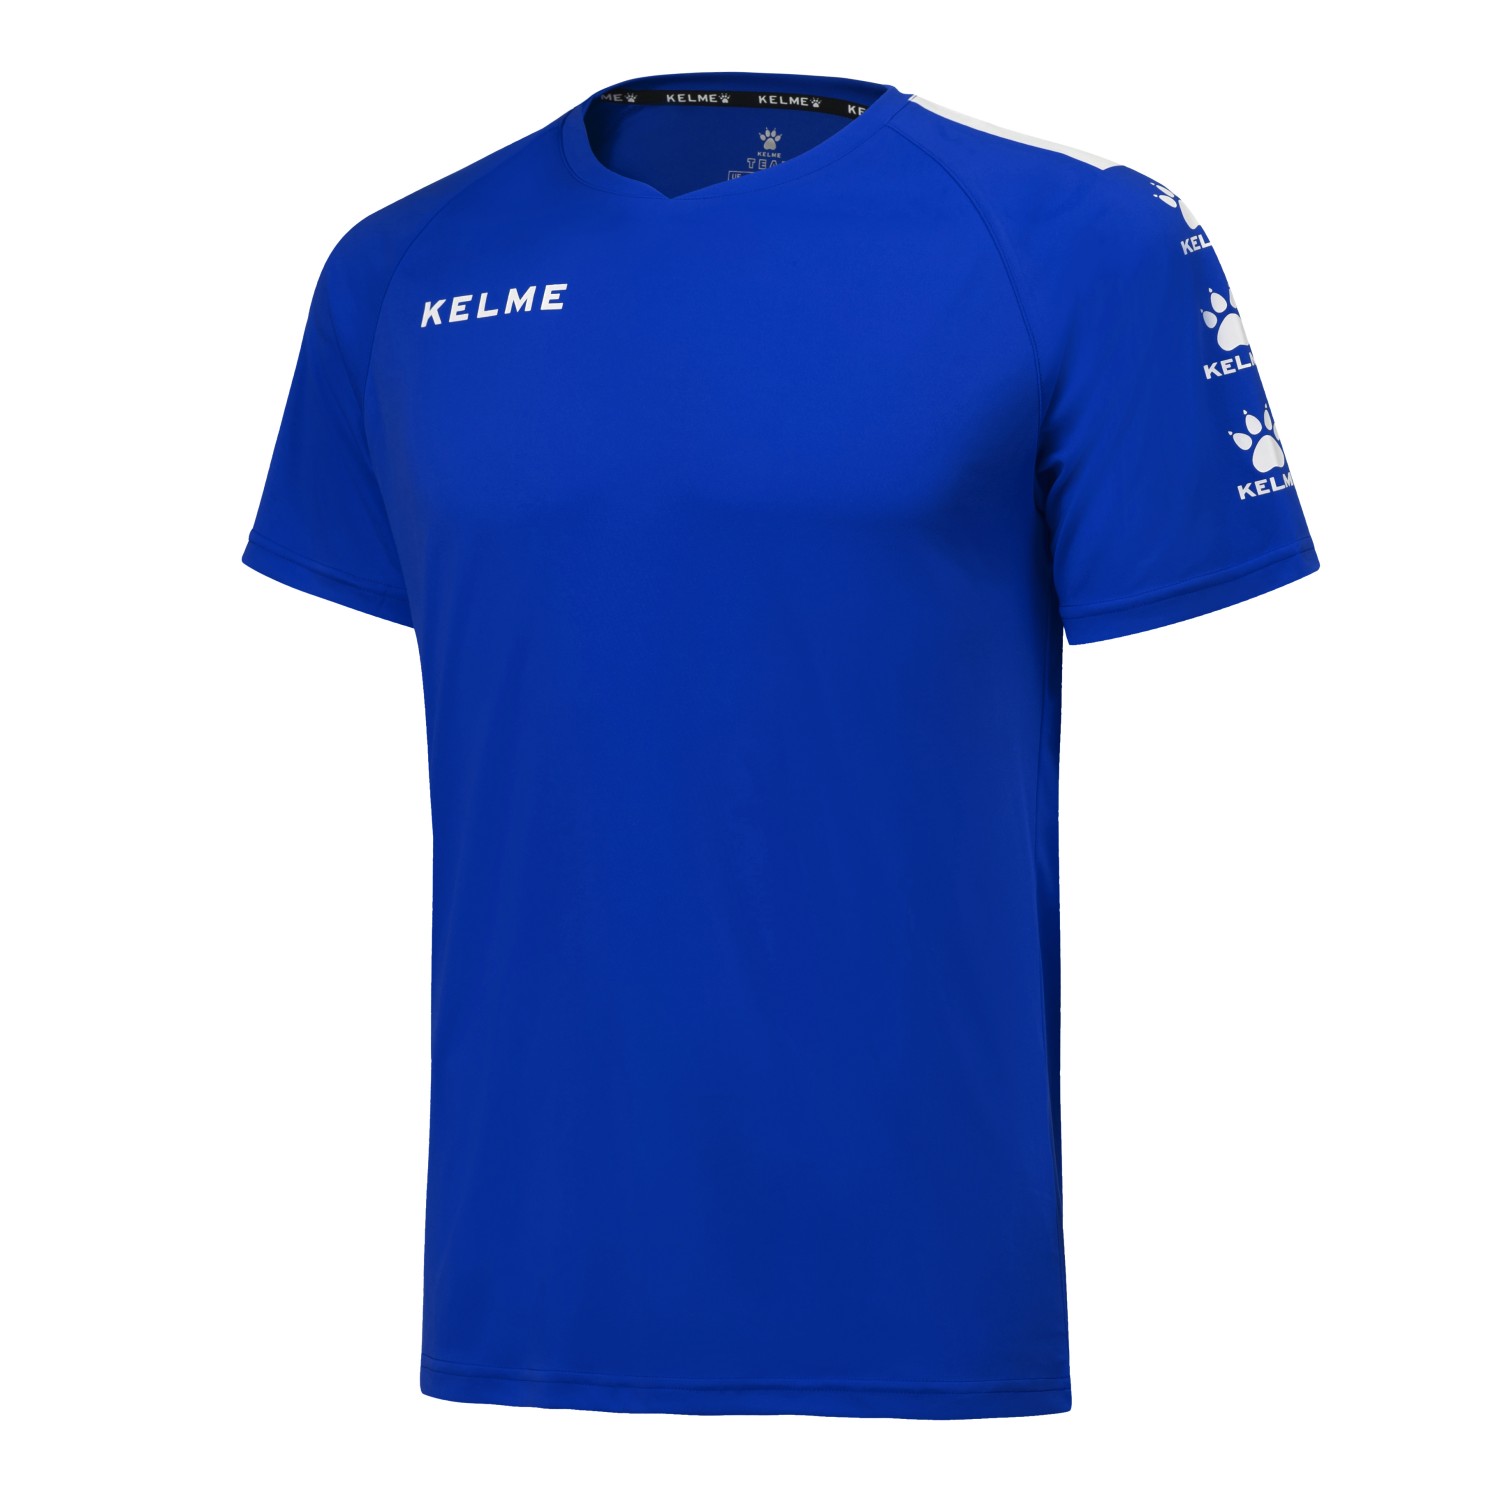 T-shirt Lince Kelme - azul - 